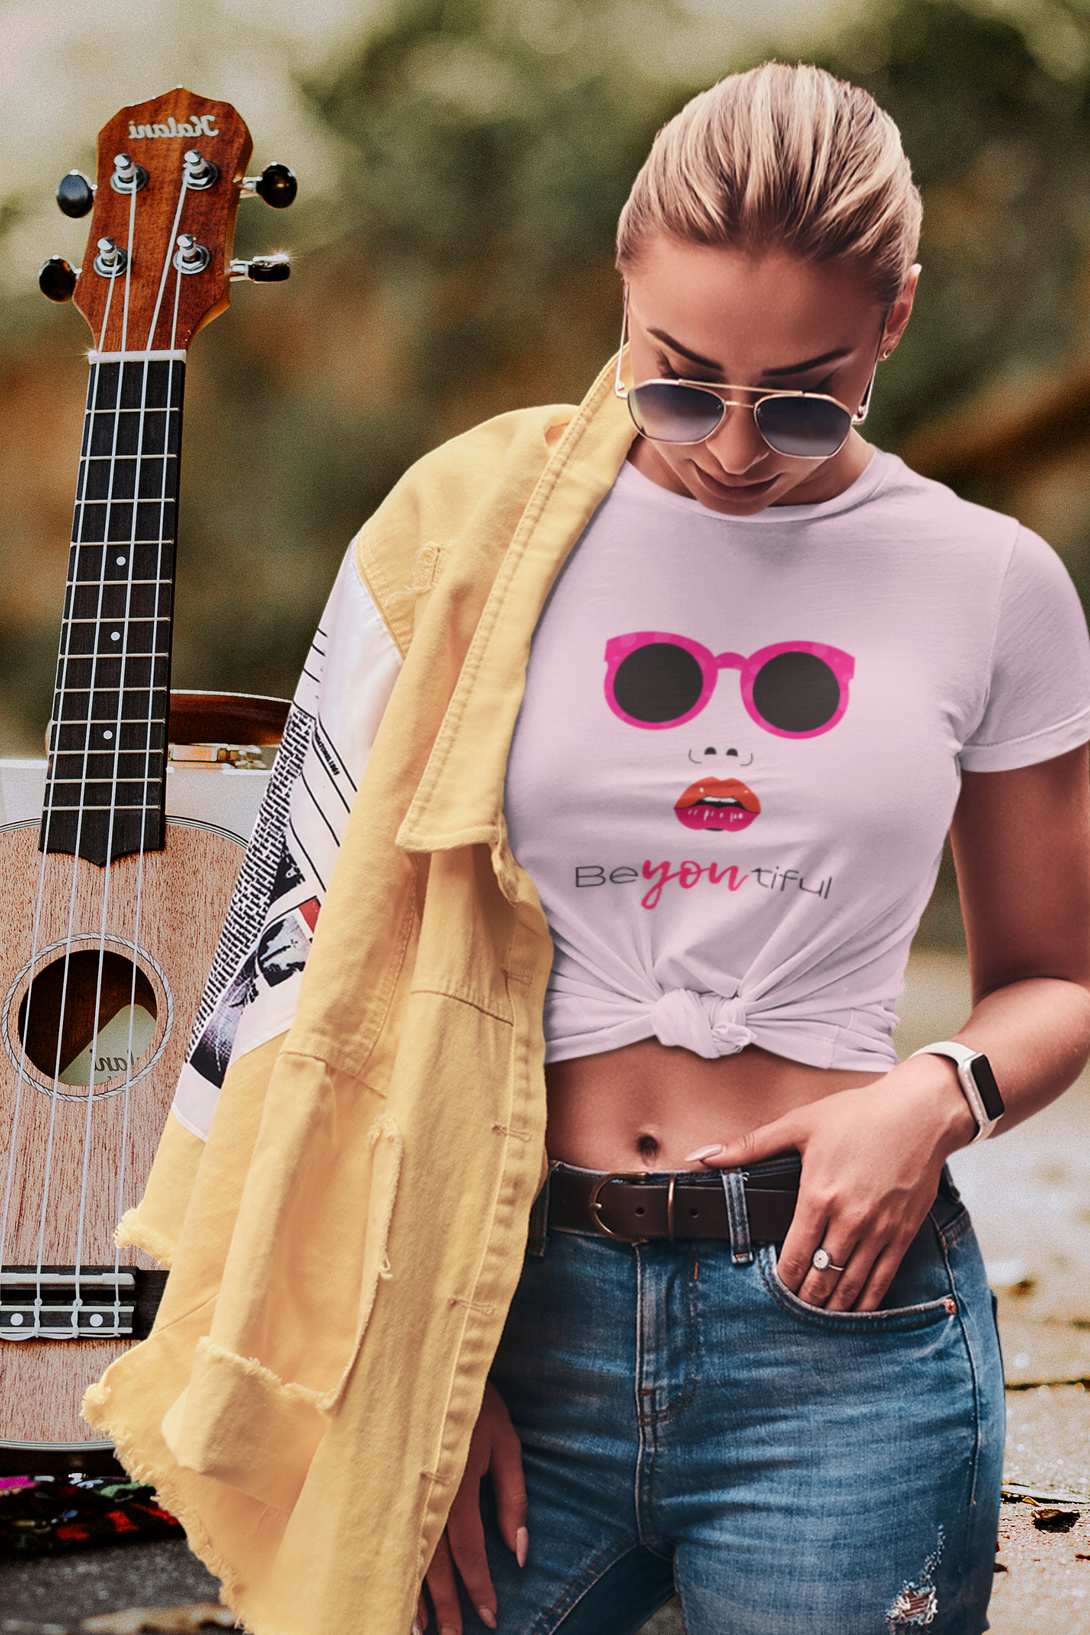 Beyoutiful Printed T-Shirt For Women - WowWaves - 2